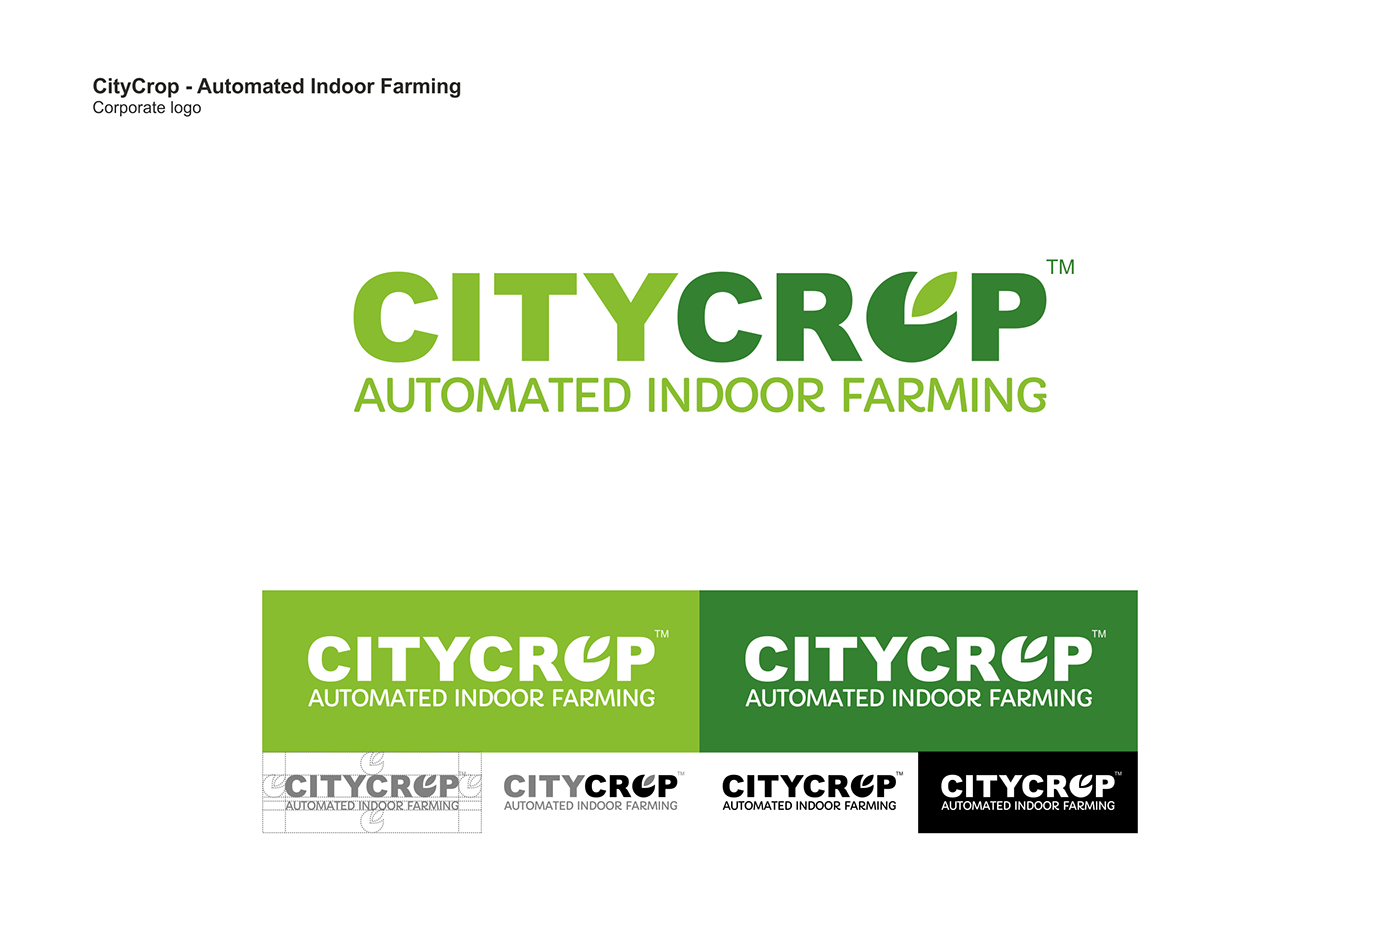 #citycrop #automated #indoor #farming